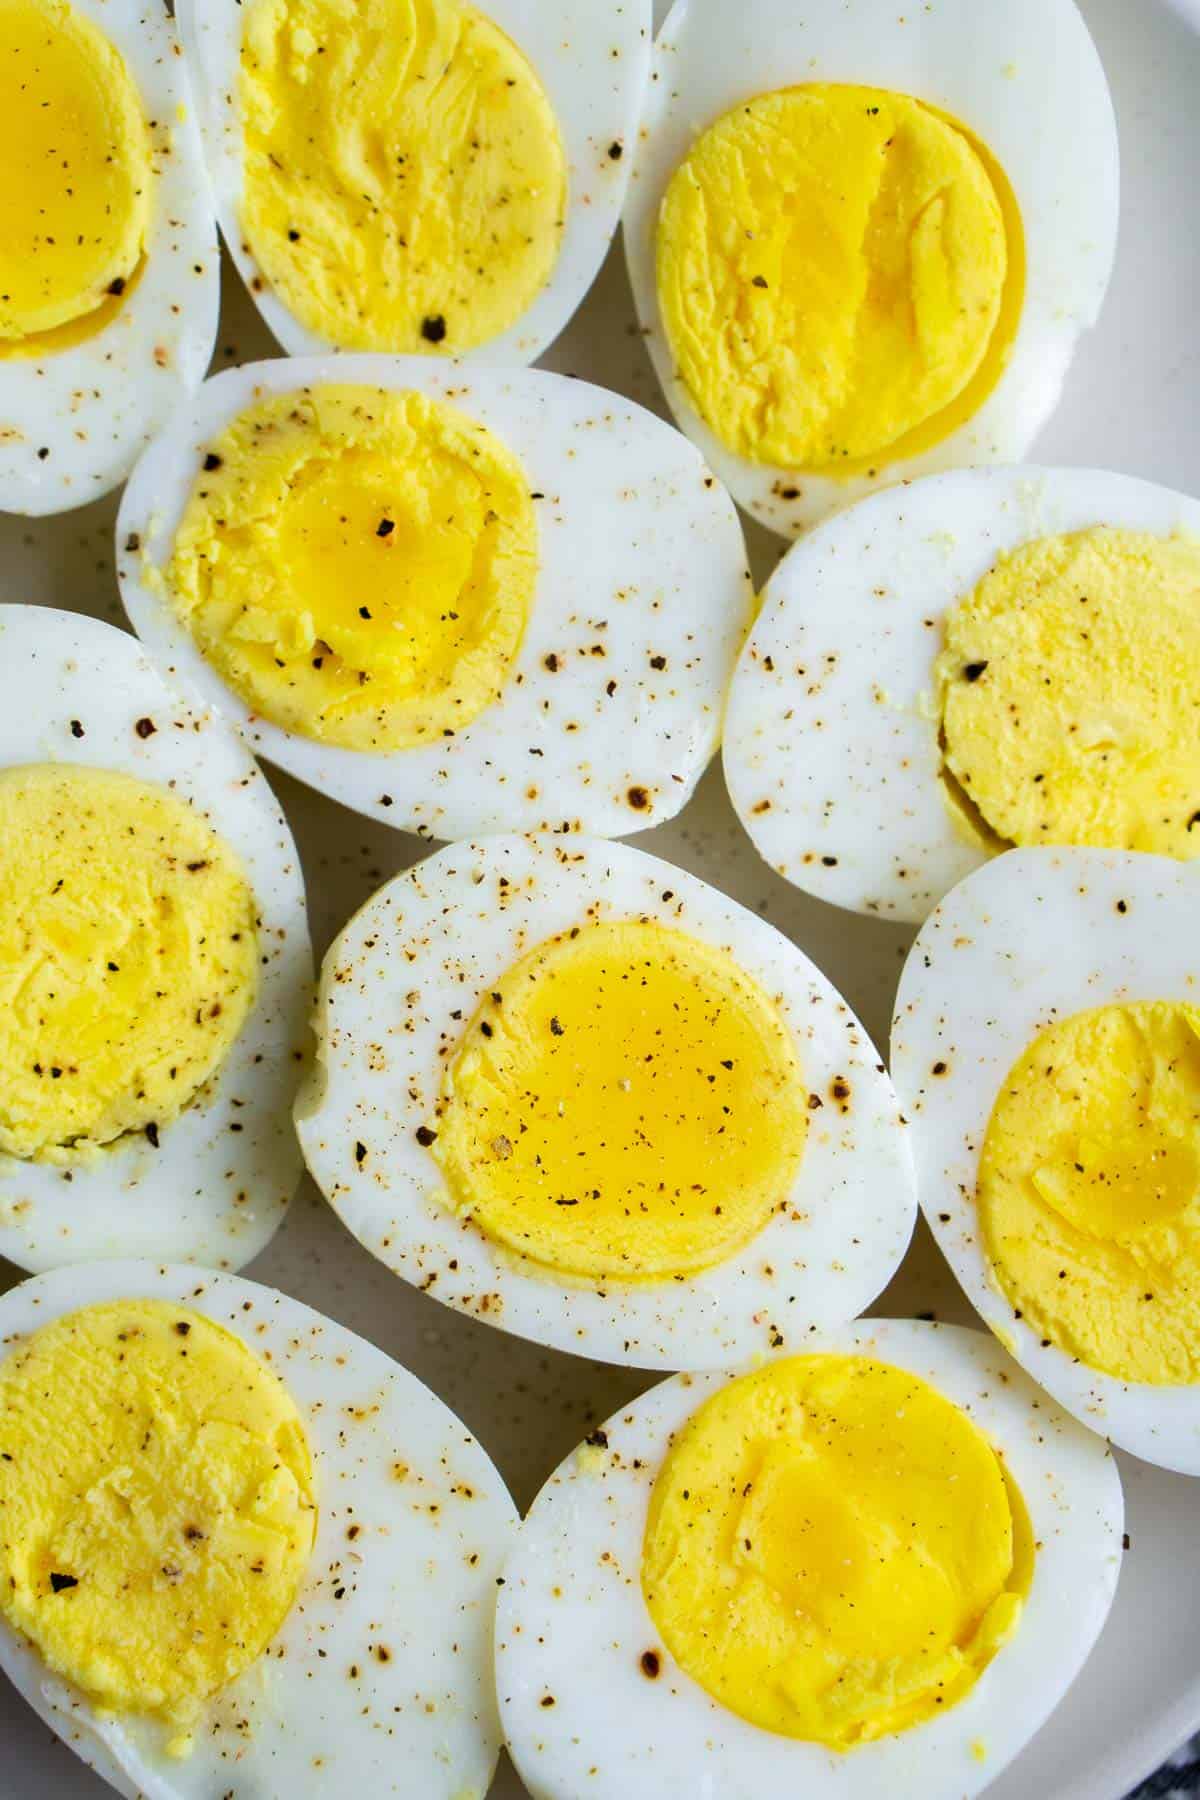 Halved air fryer hard boiled eggs with seasoning